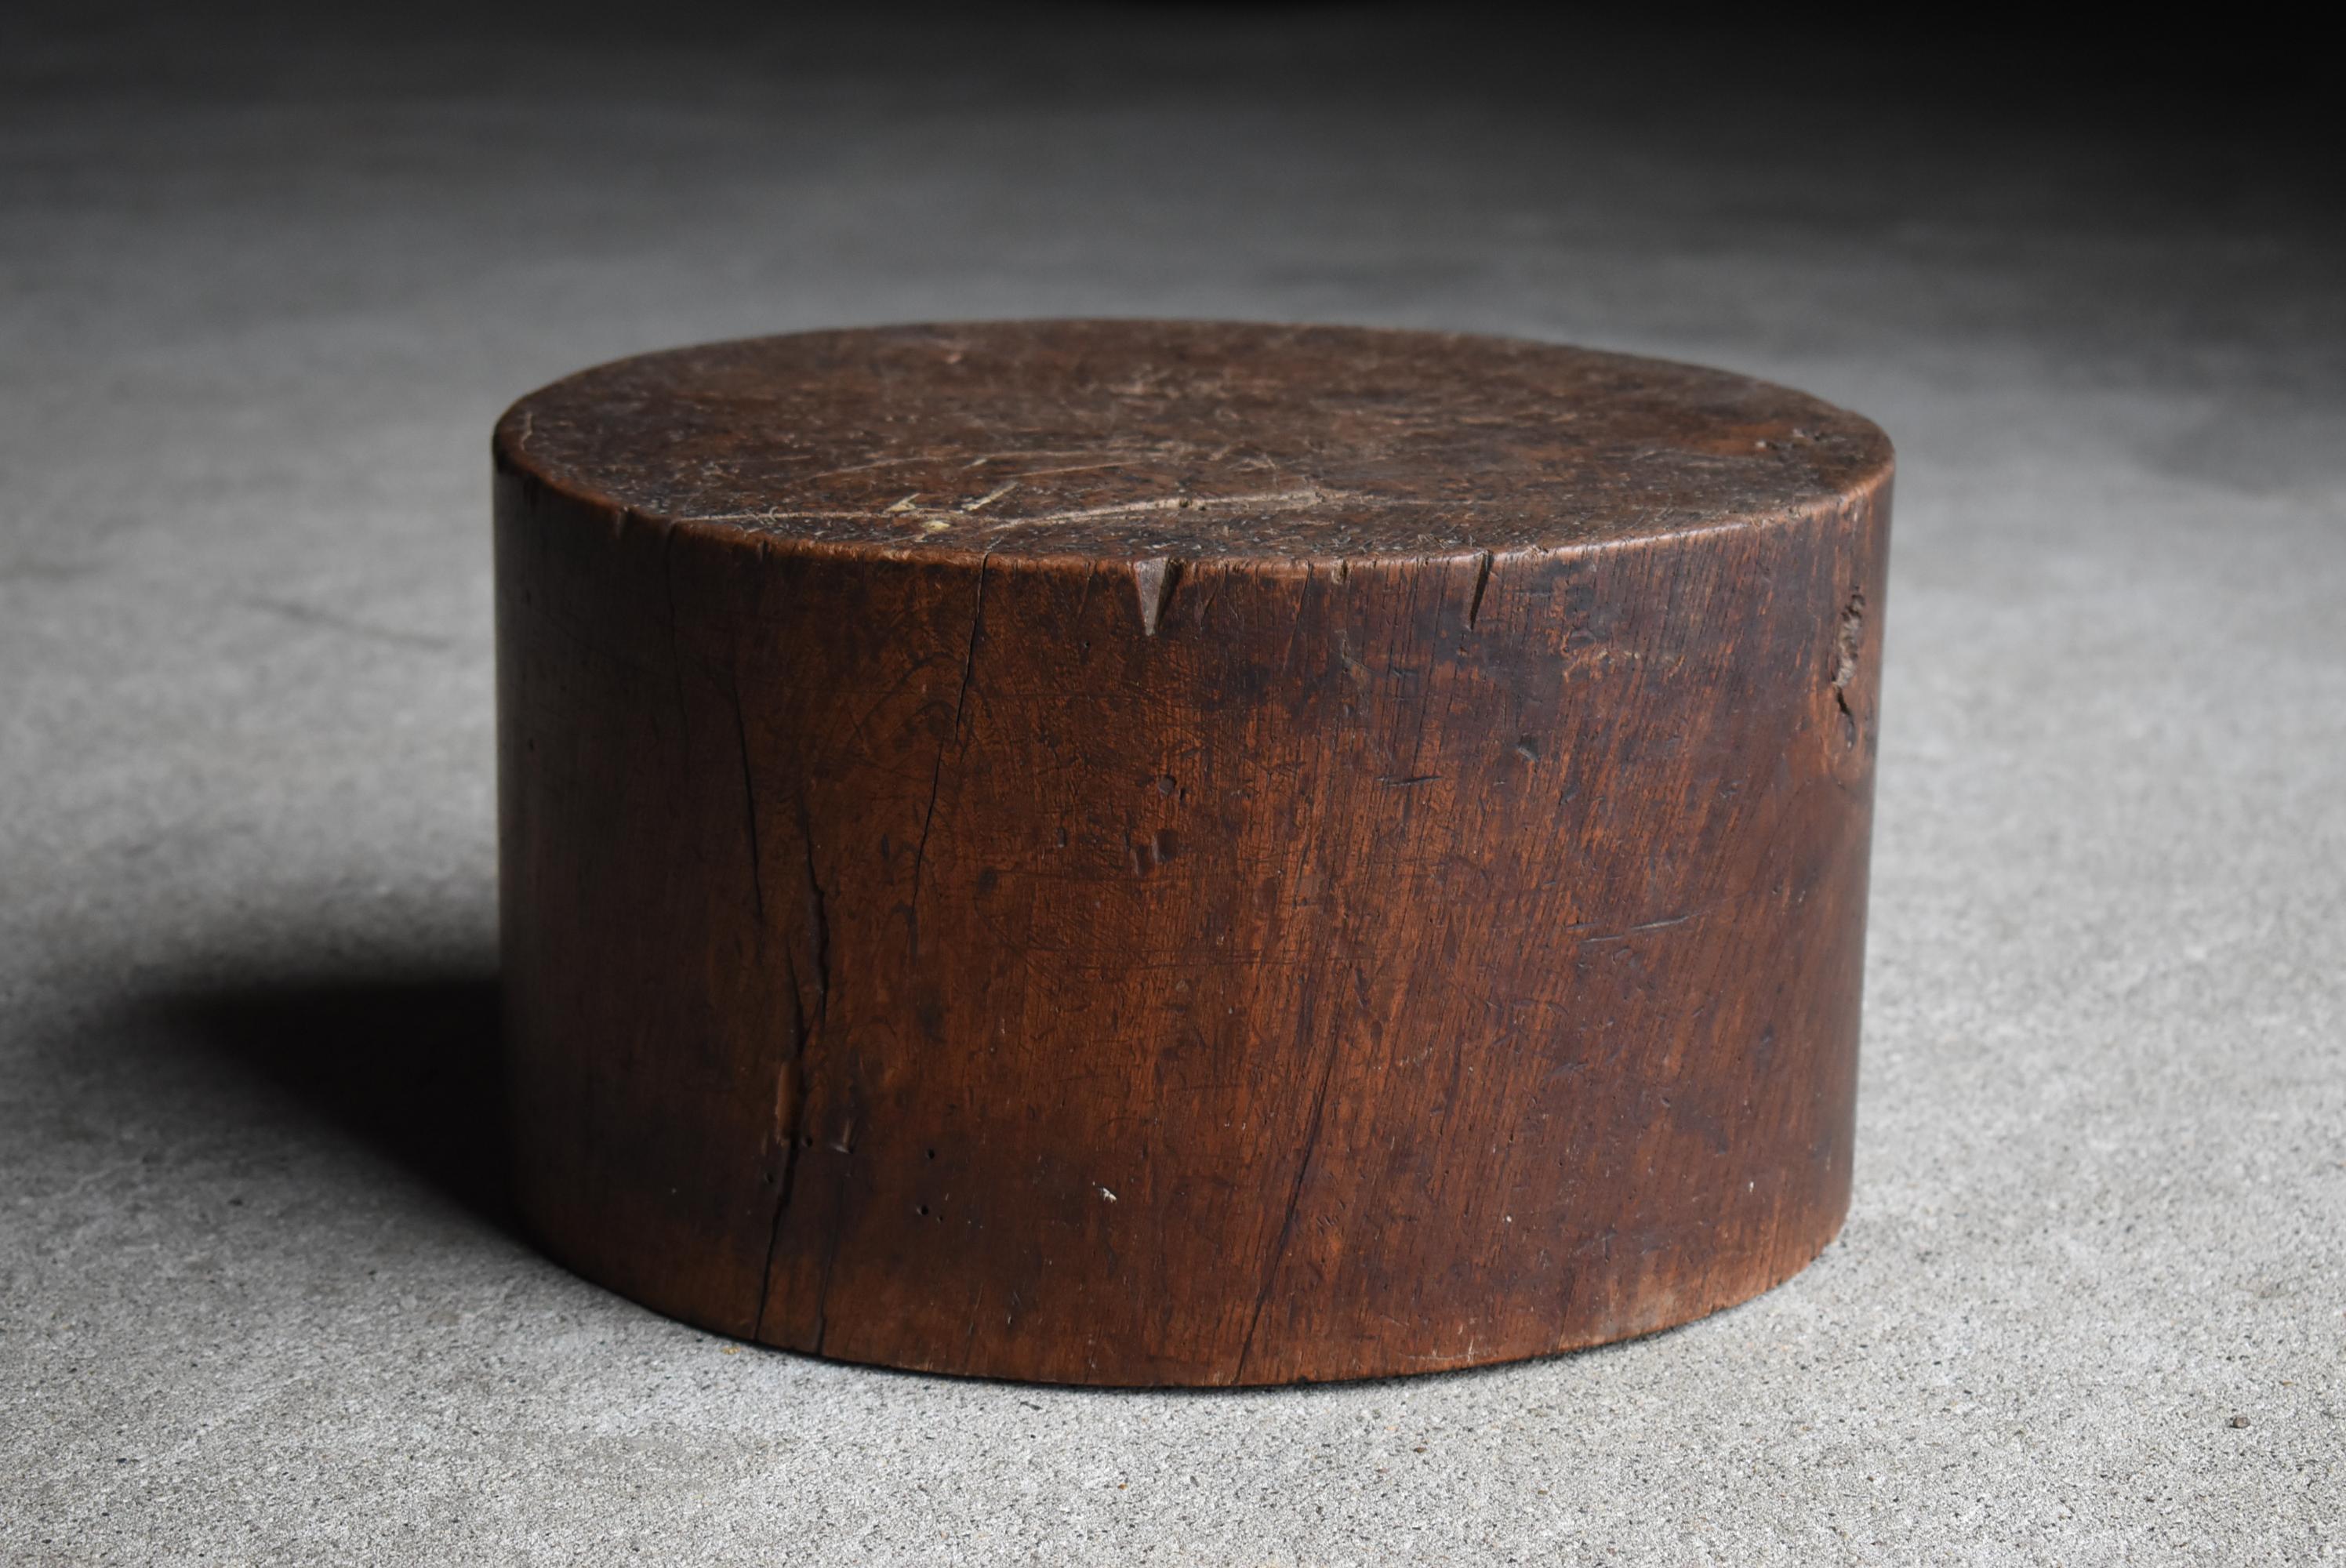 Japanese Antique Wooden Block Stool 1860s-1900s / Primitive Wabi Sabi Wood Chair 6